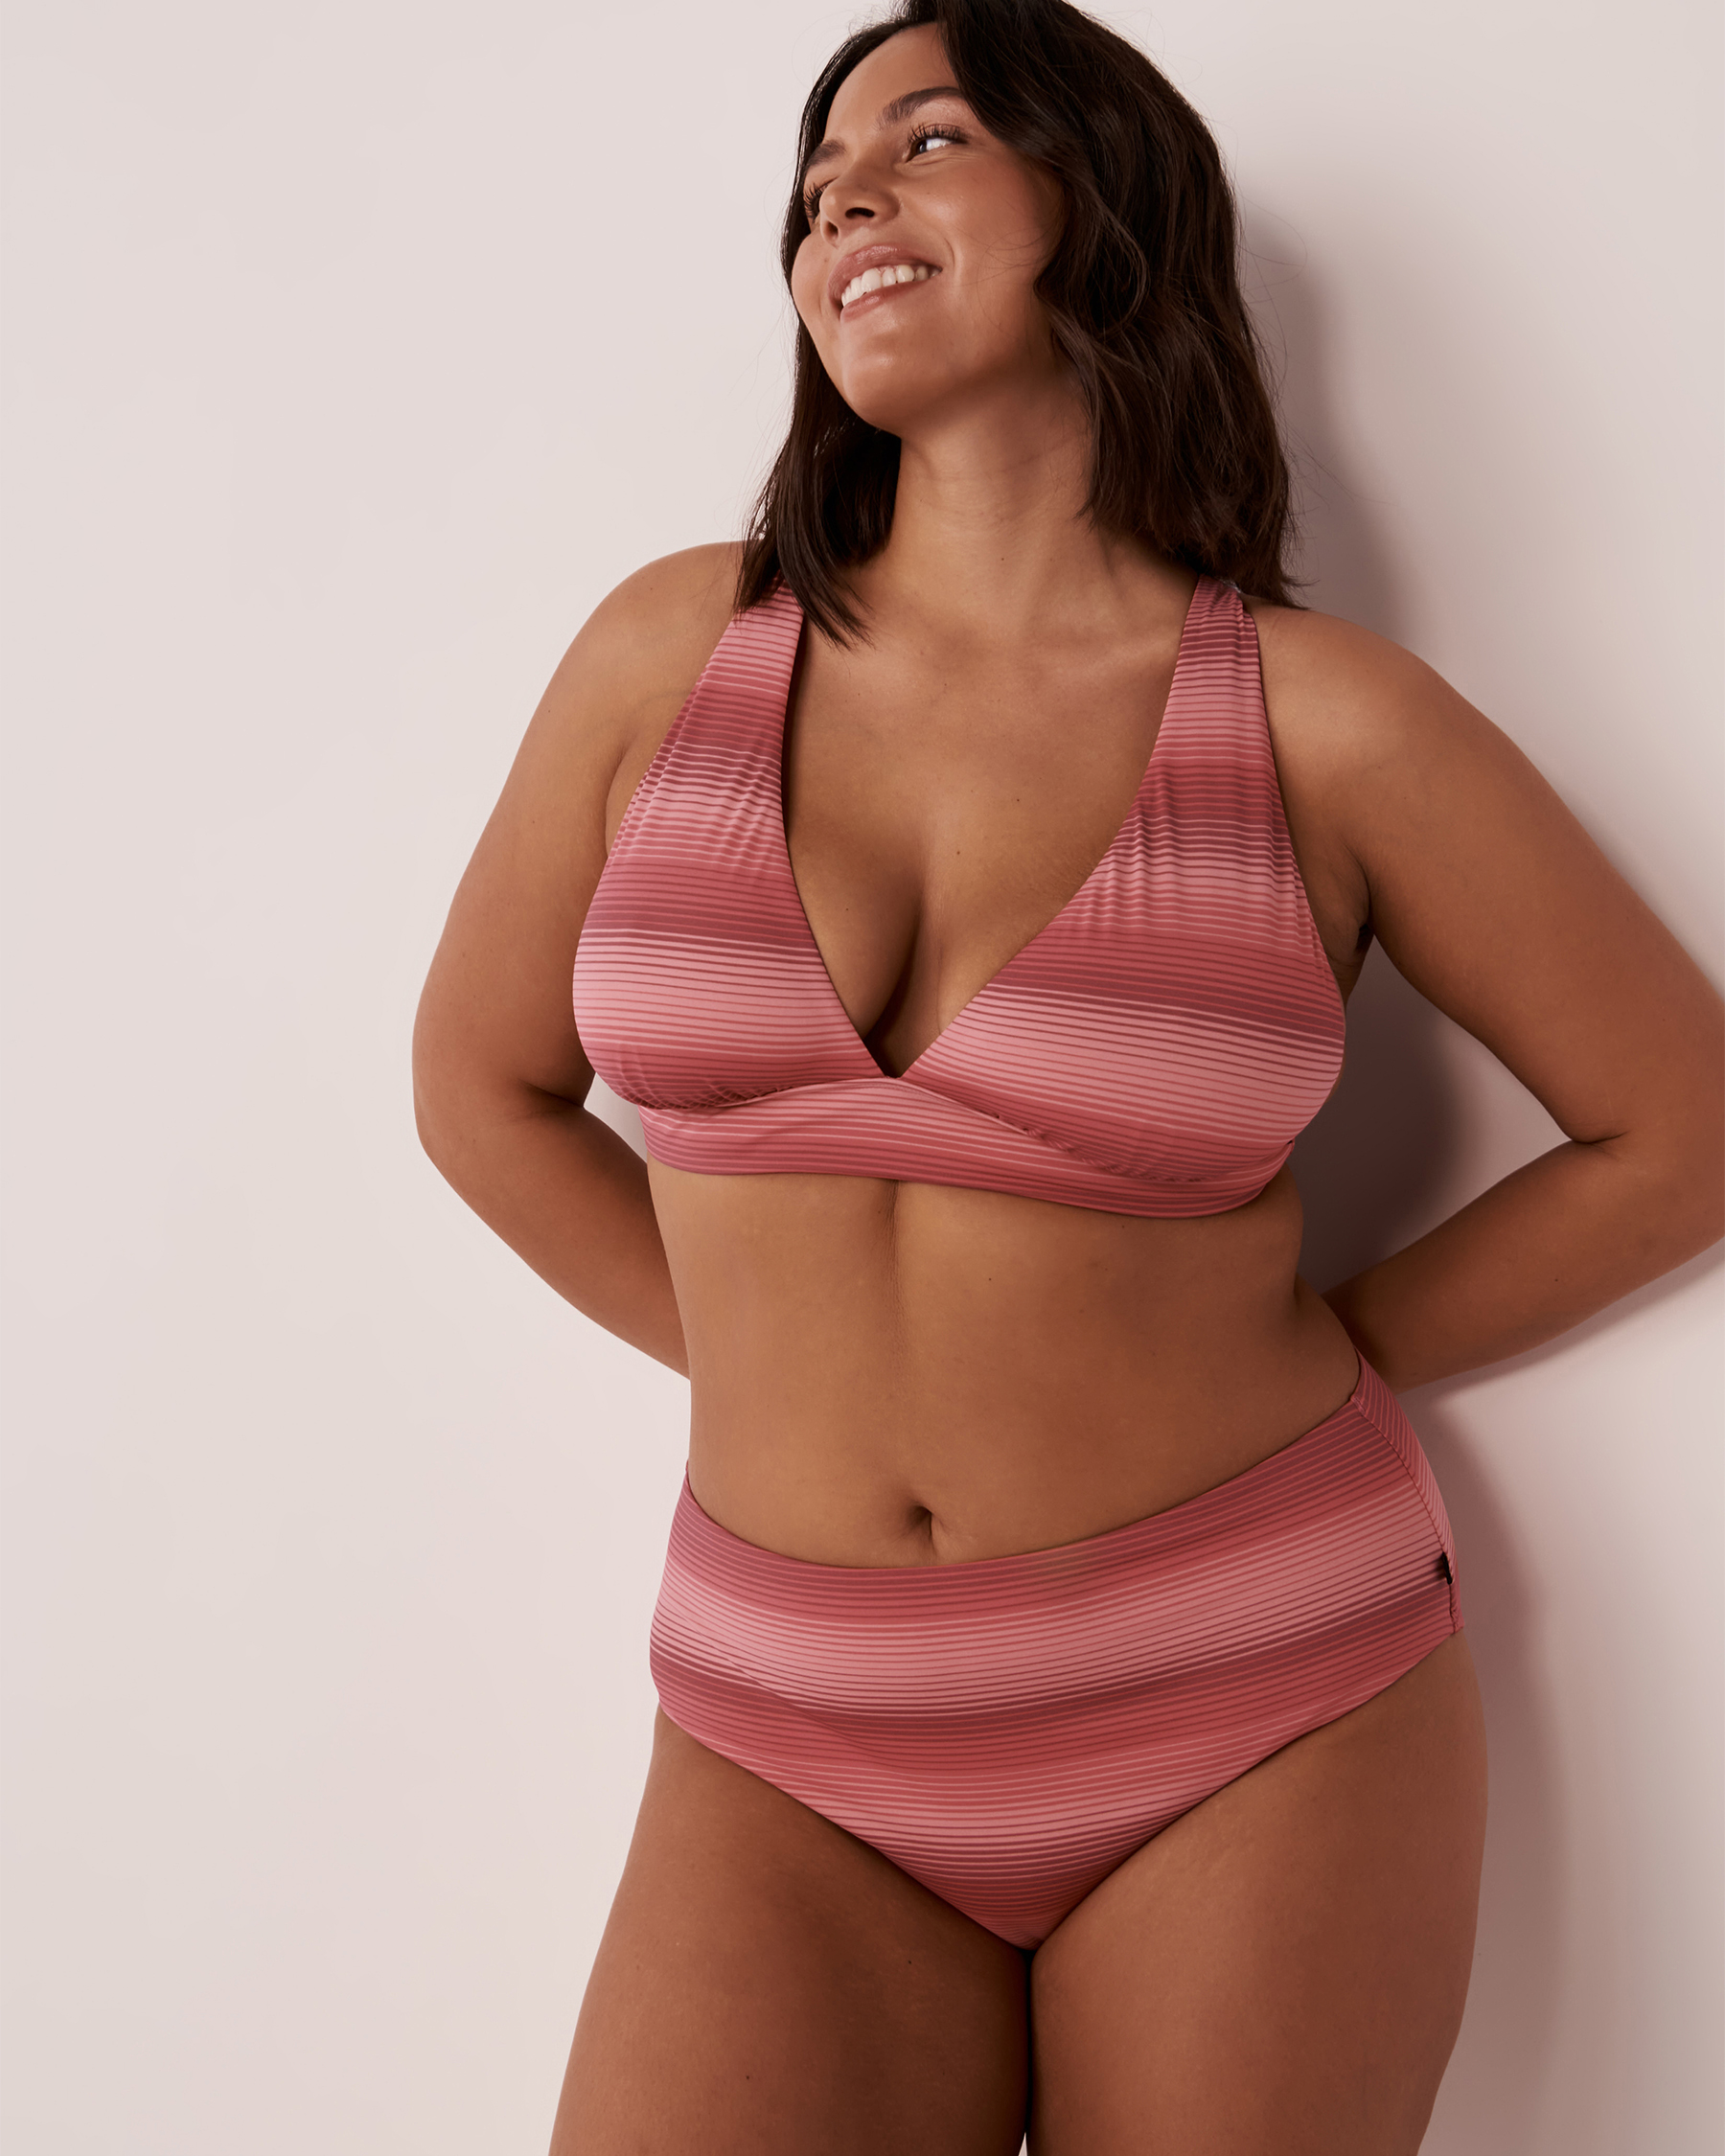 LA VIE EN ROSE AQUA STRIPES Recycled Fibers Triangle Bikini Top Pink stripes 70100387 - View3